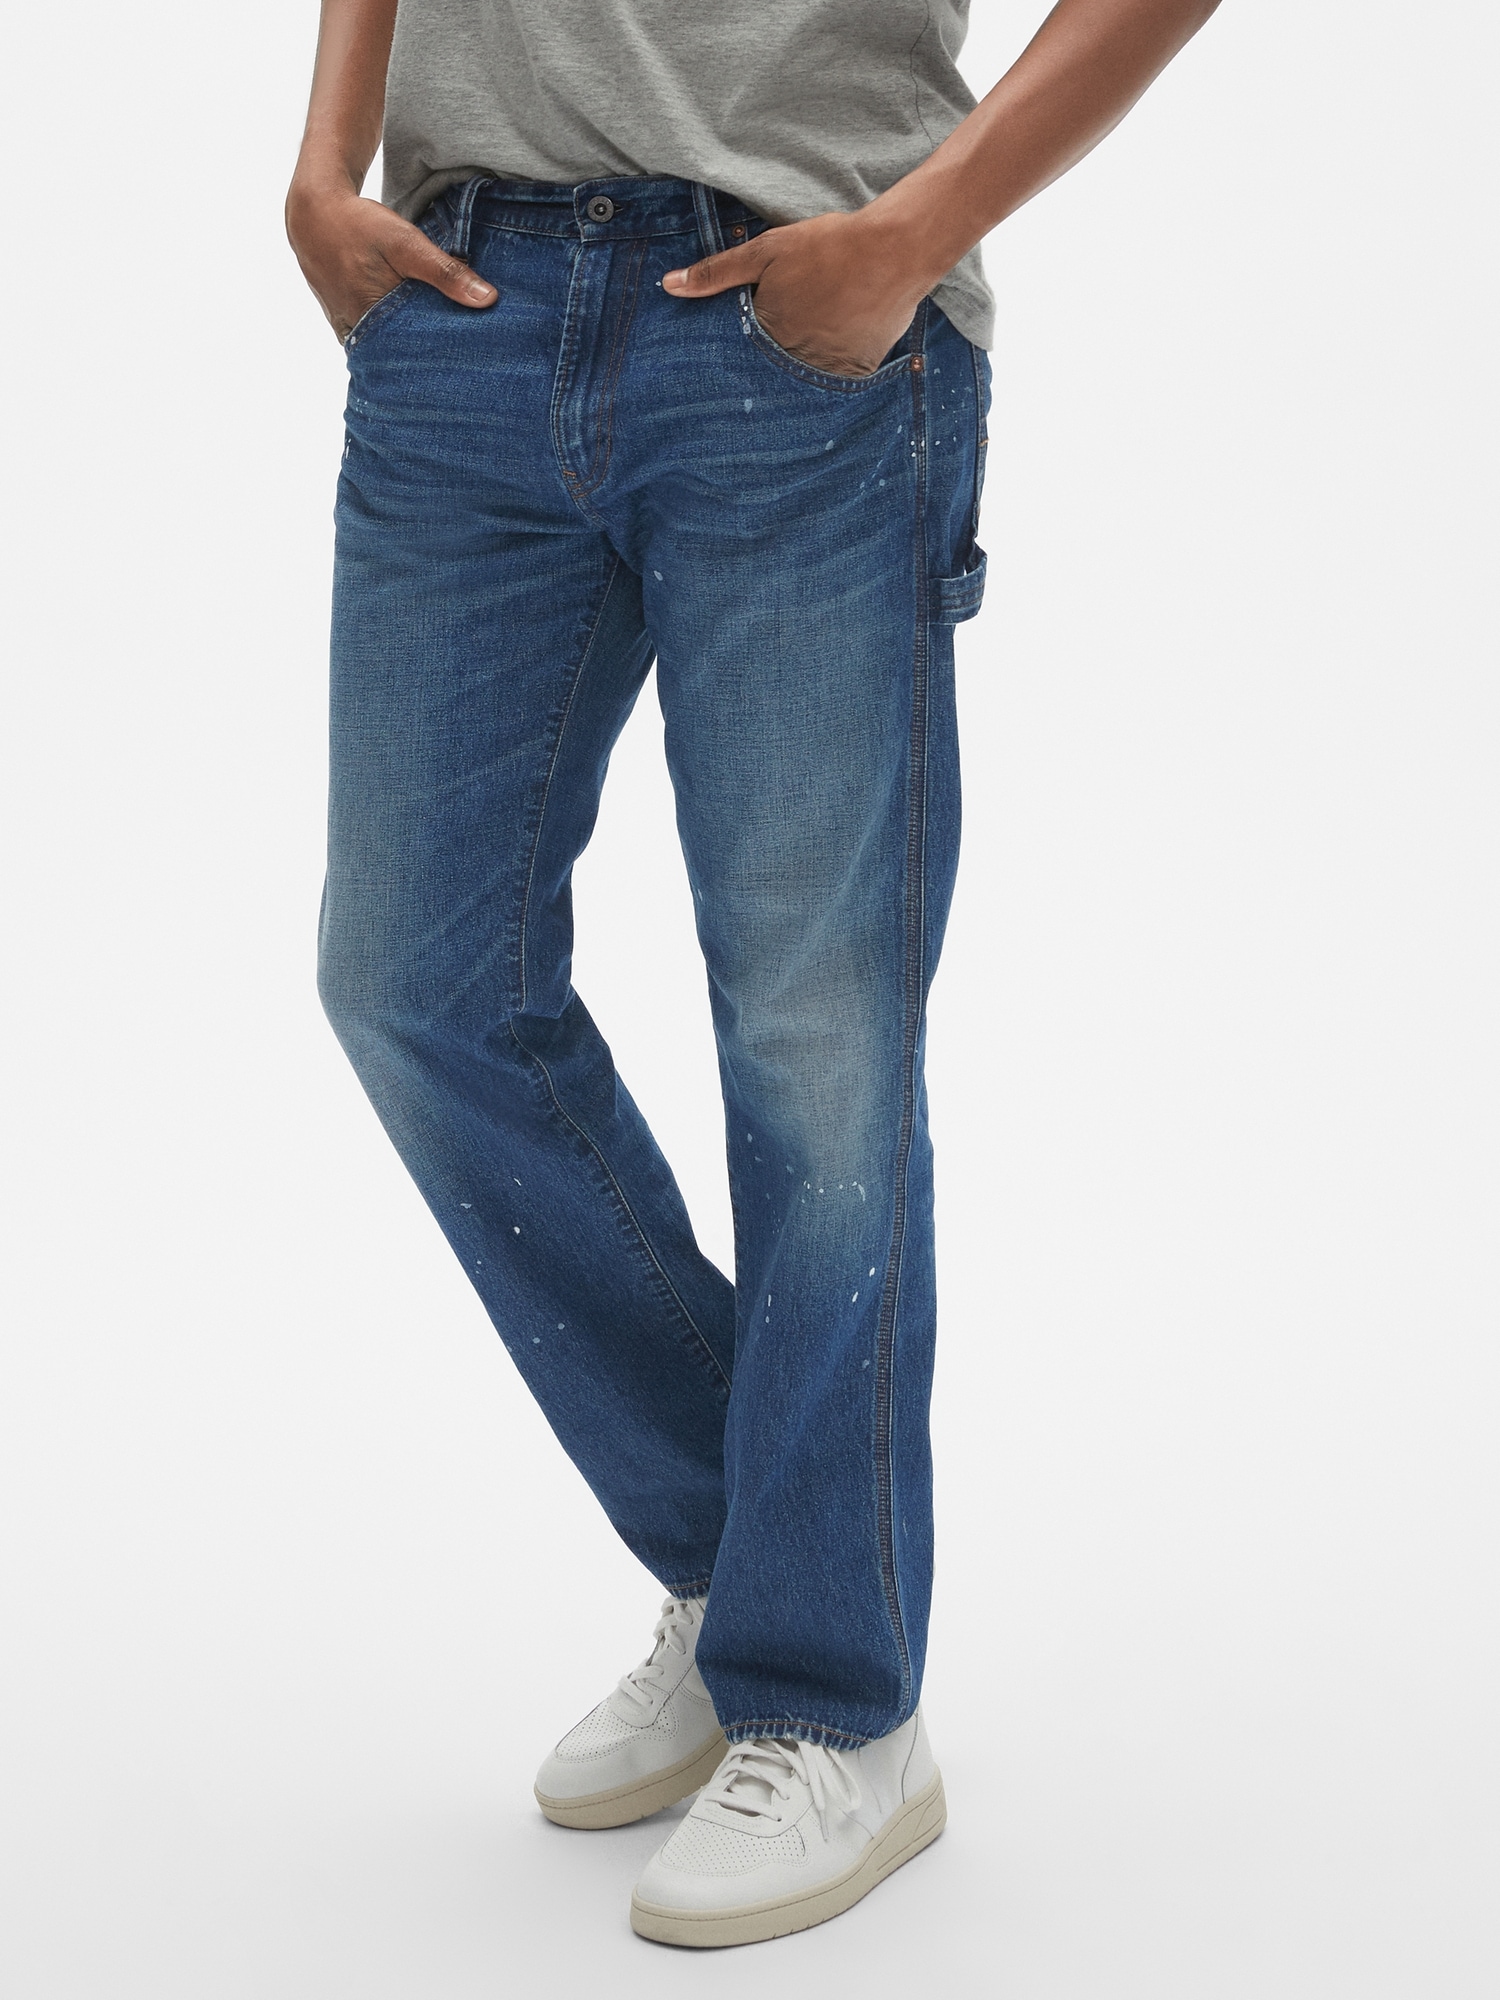 mens jeans 1980s